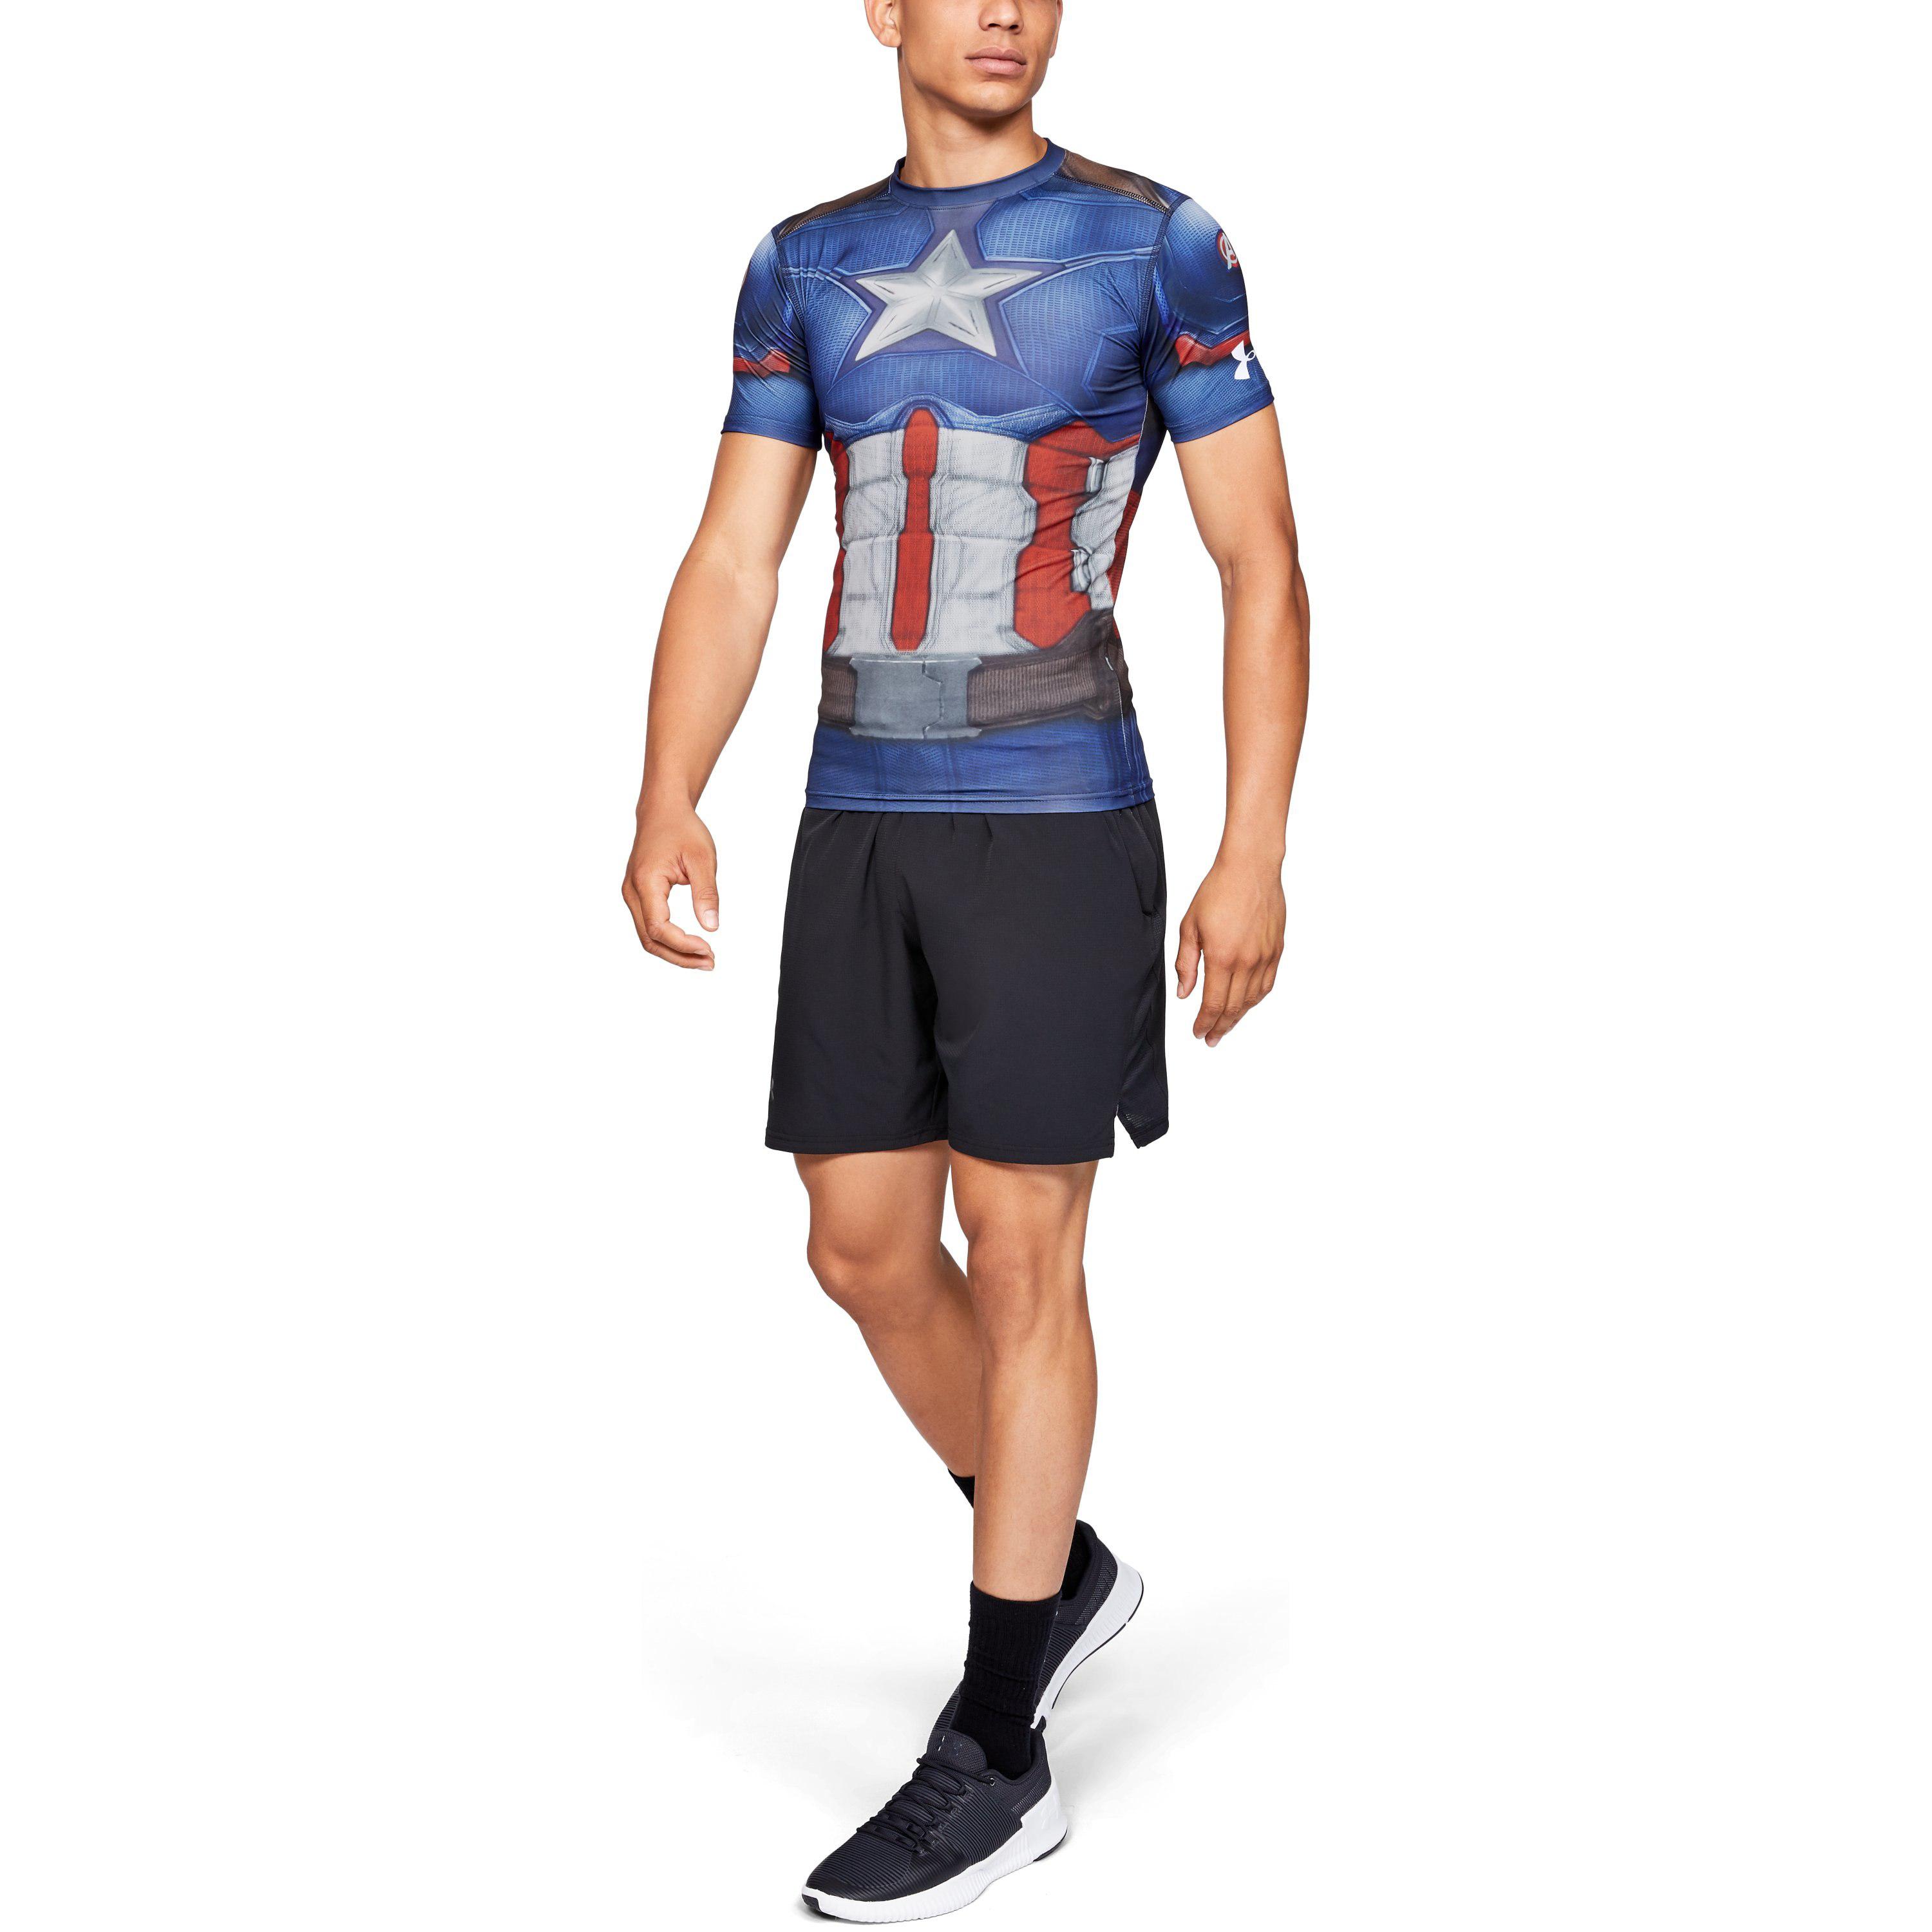 Under Armour Men's ® Alter Ego Captain America Compression Shirt for Men |  Lyst